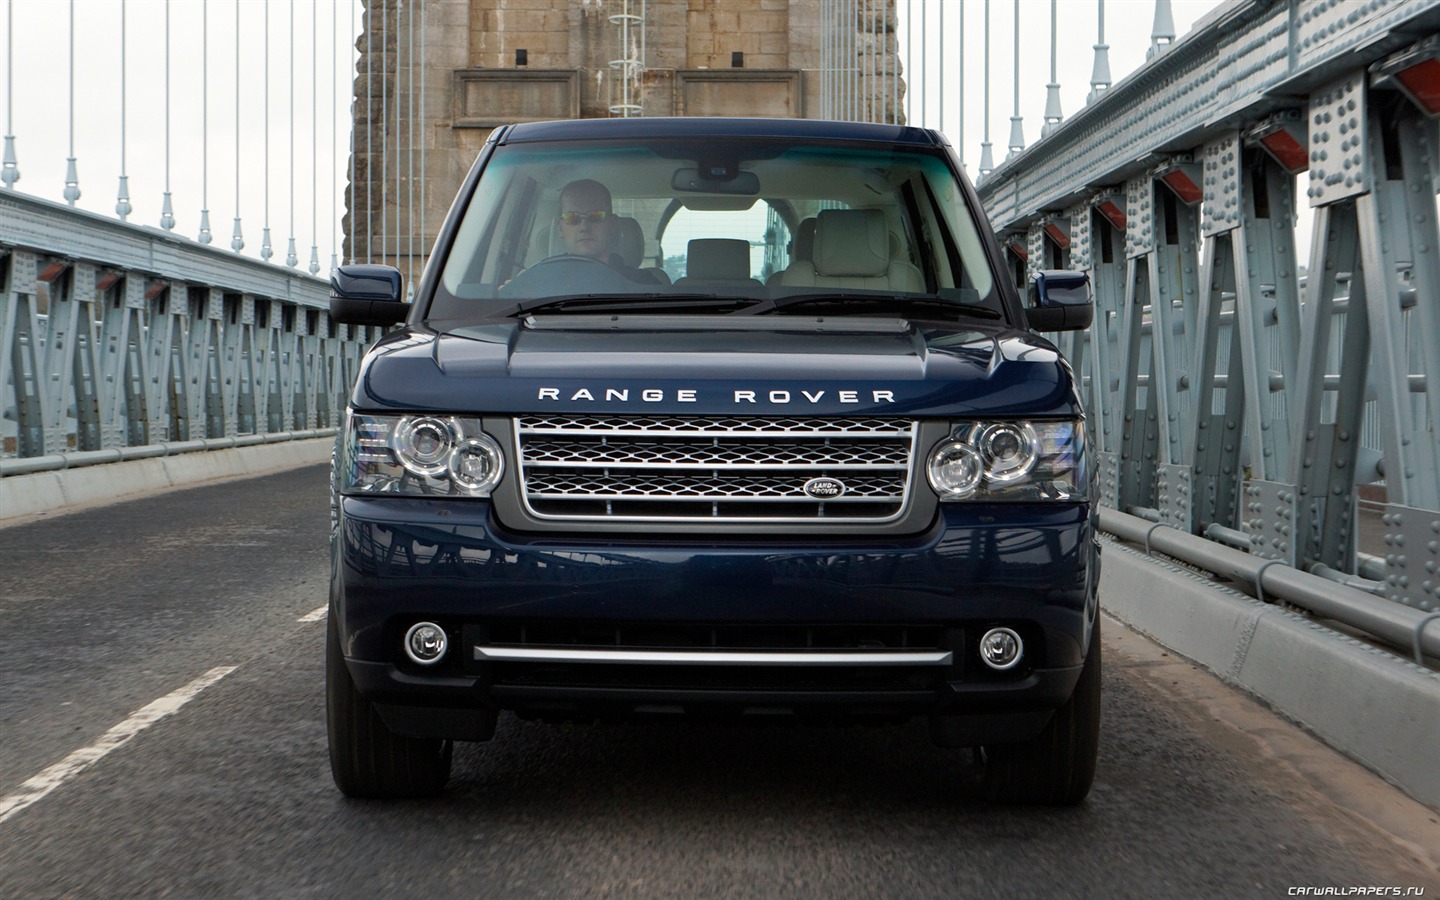 Land Rover Range Rover - 2011 路虎19 - 1440x900